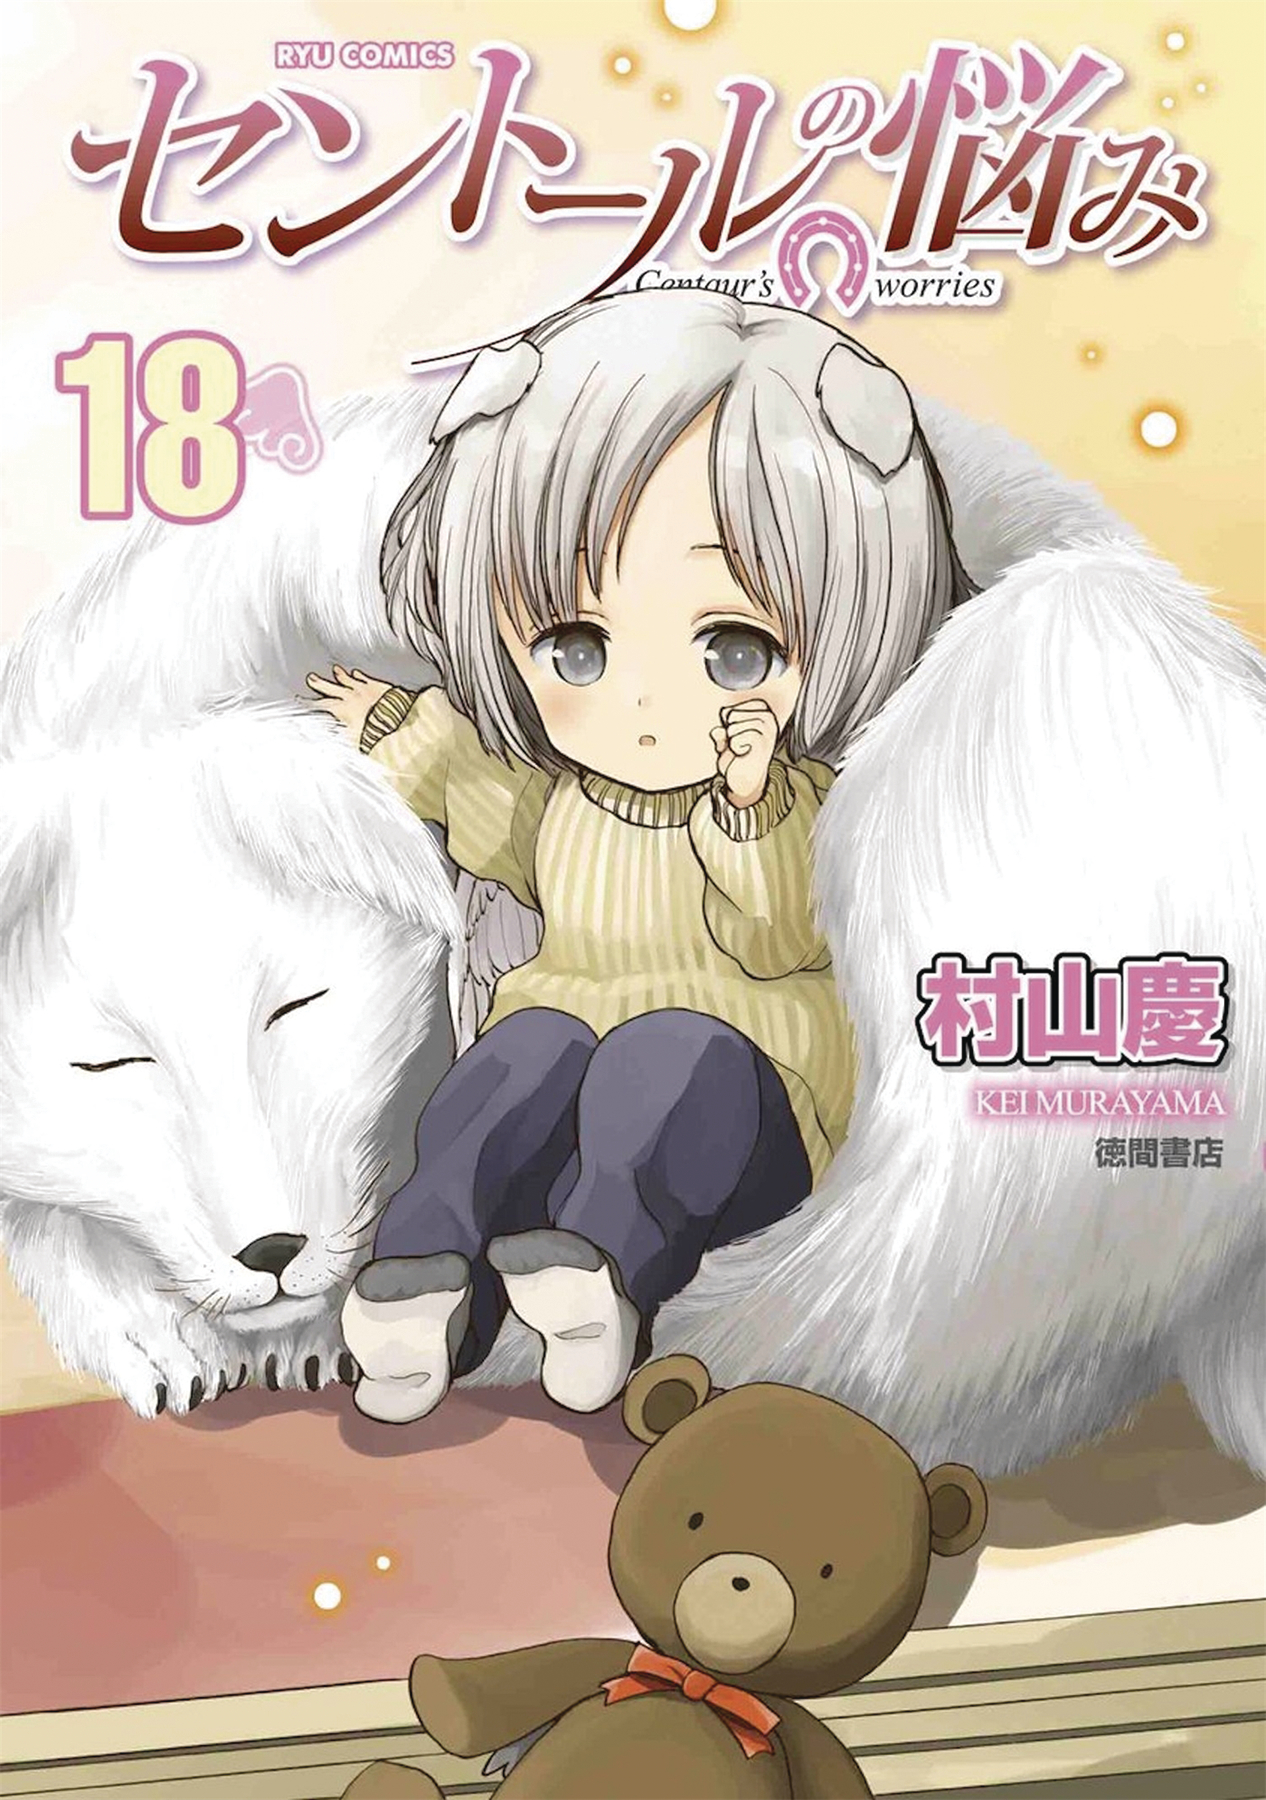 A Centaurs Life Manga Volume 18 (Mature)